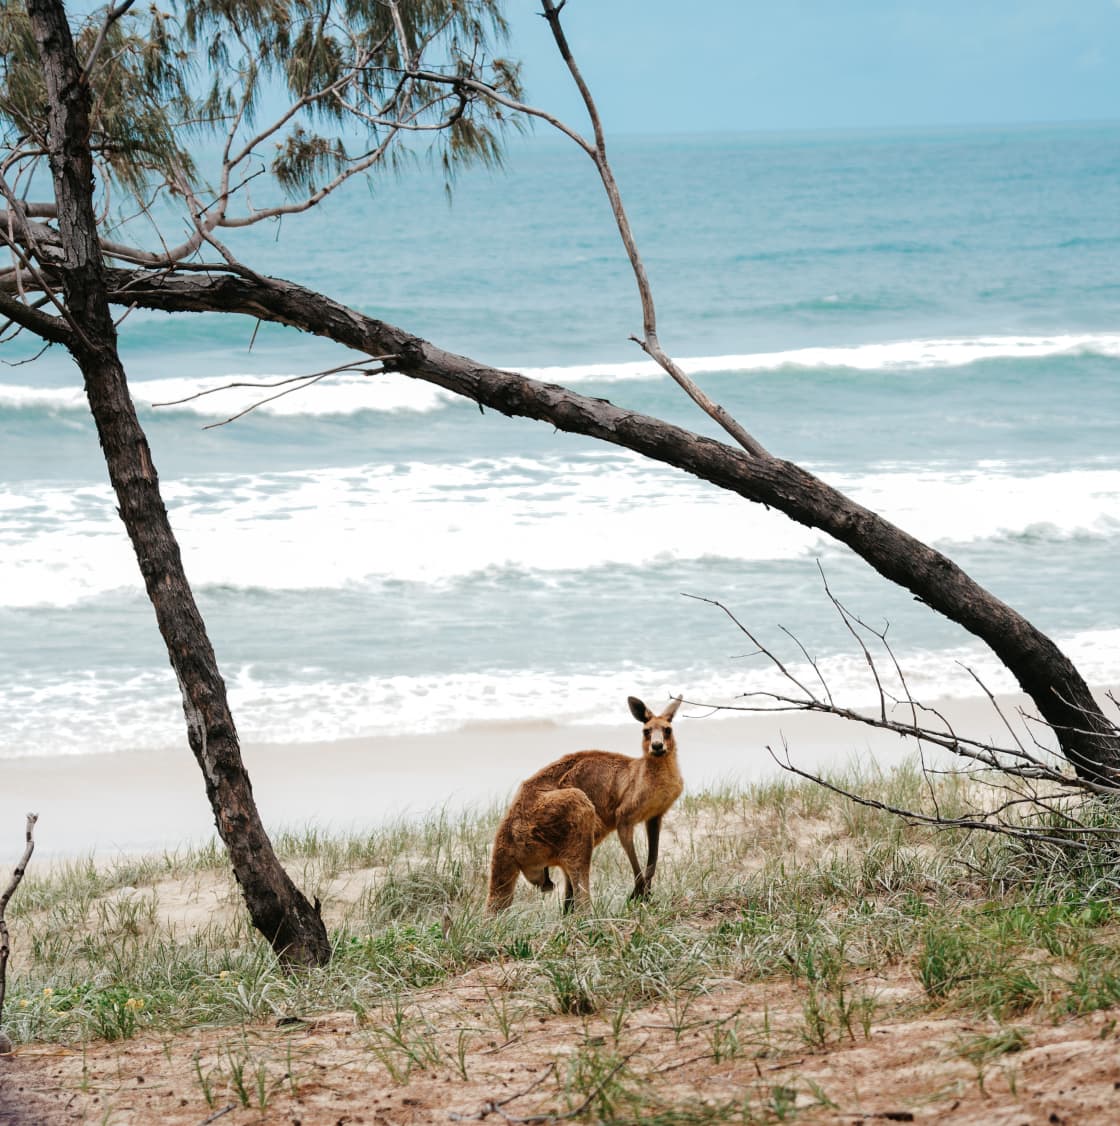 plenty of Kangaroos to spot